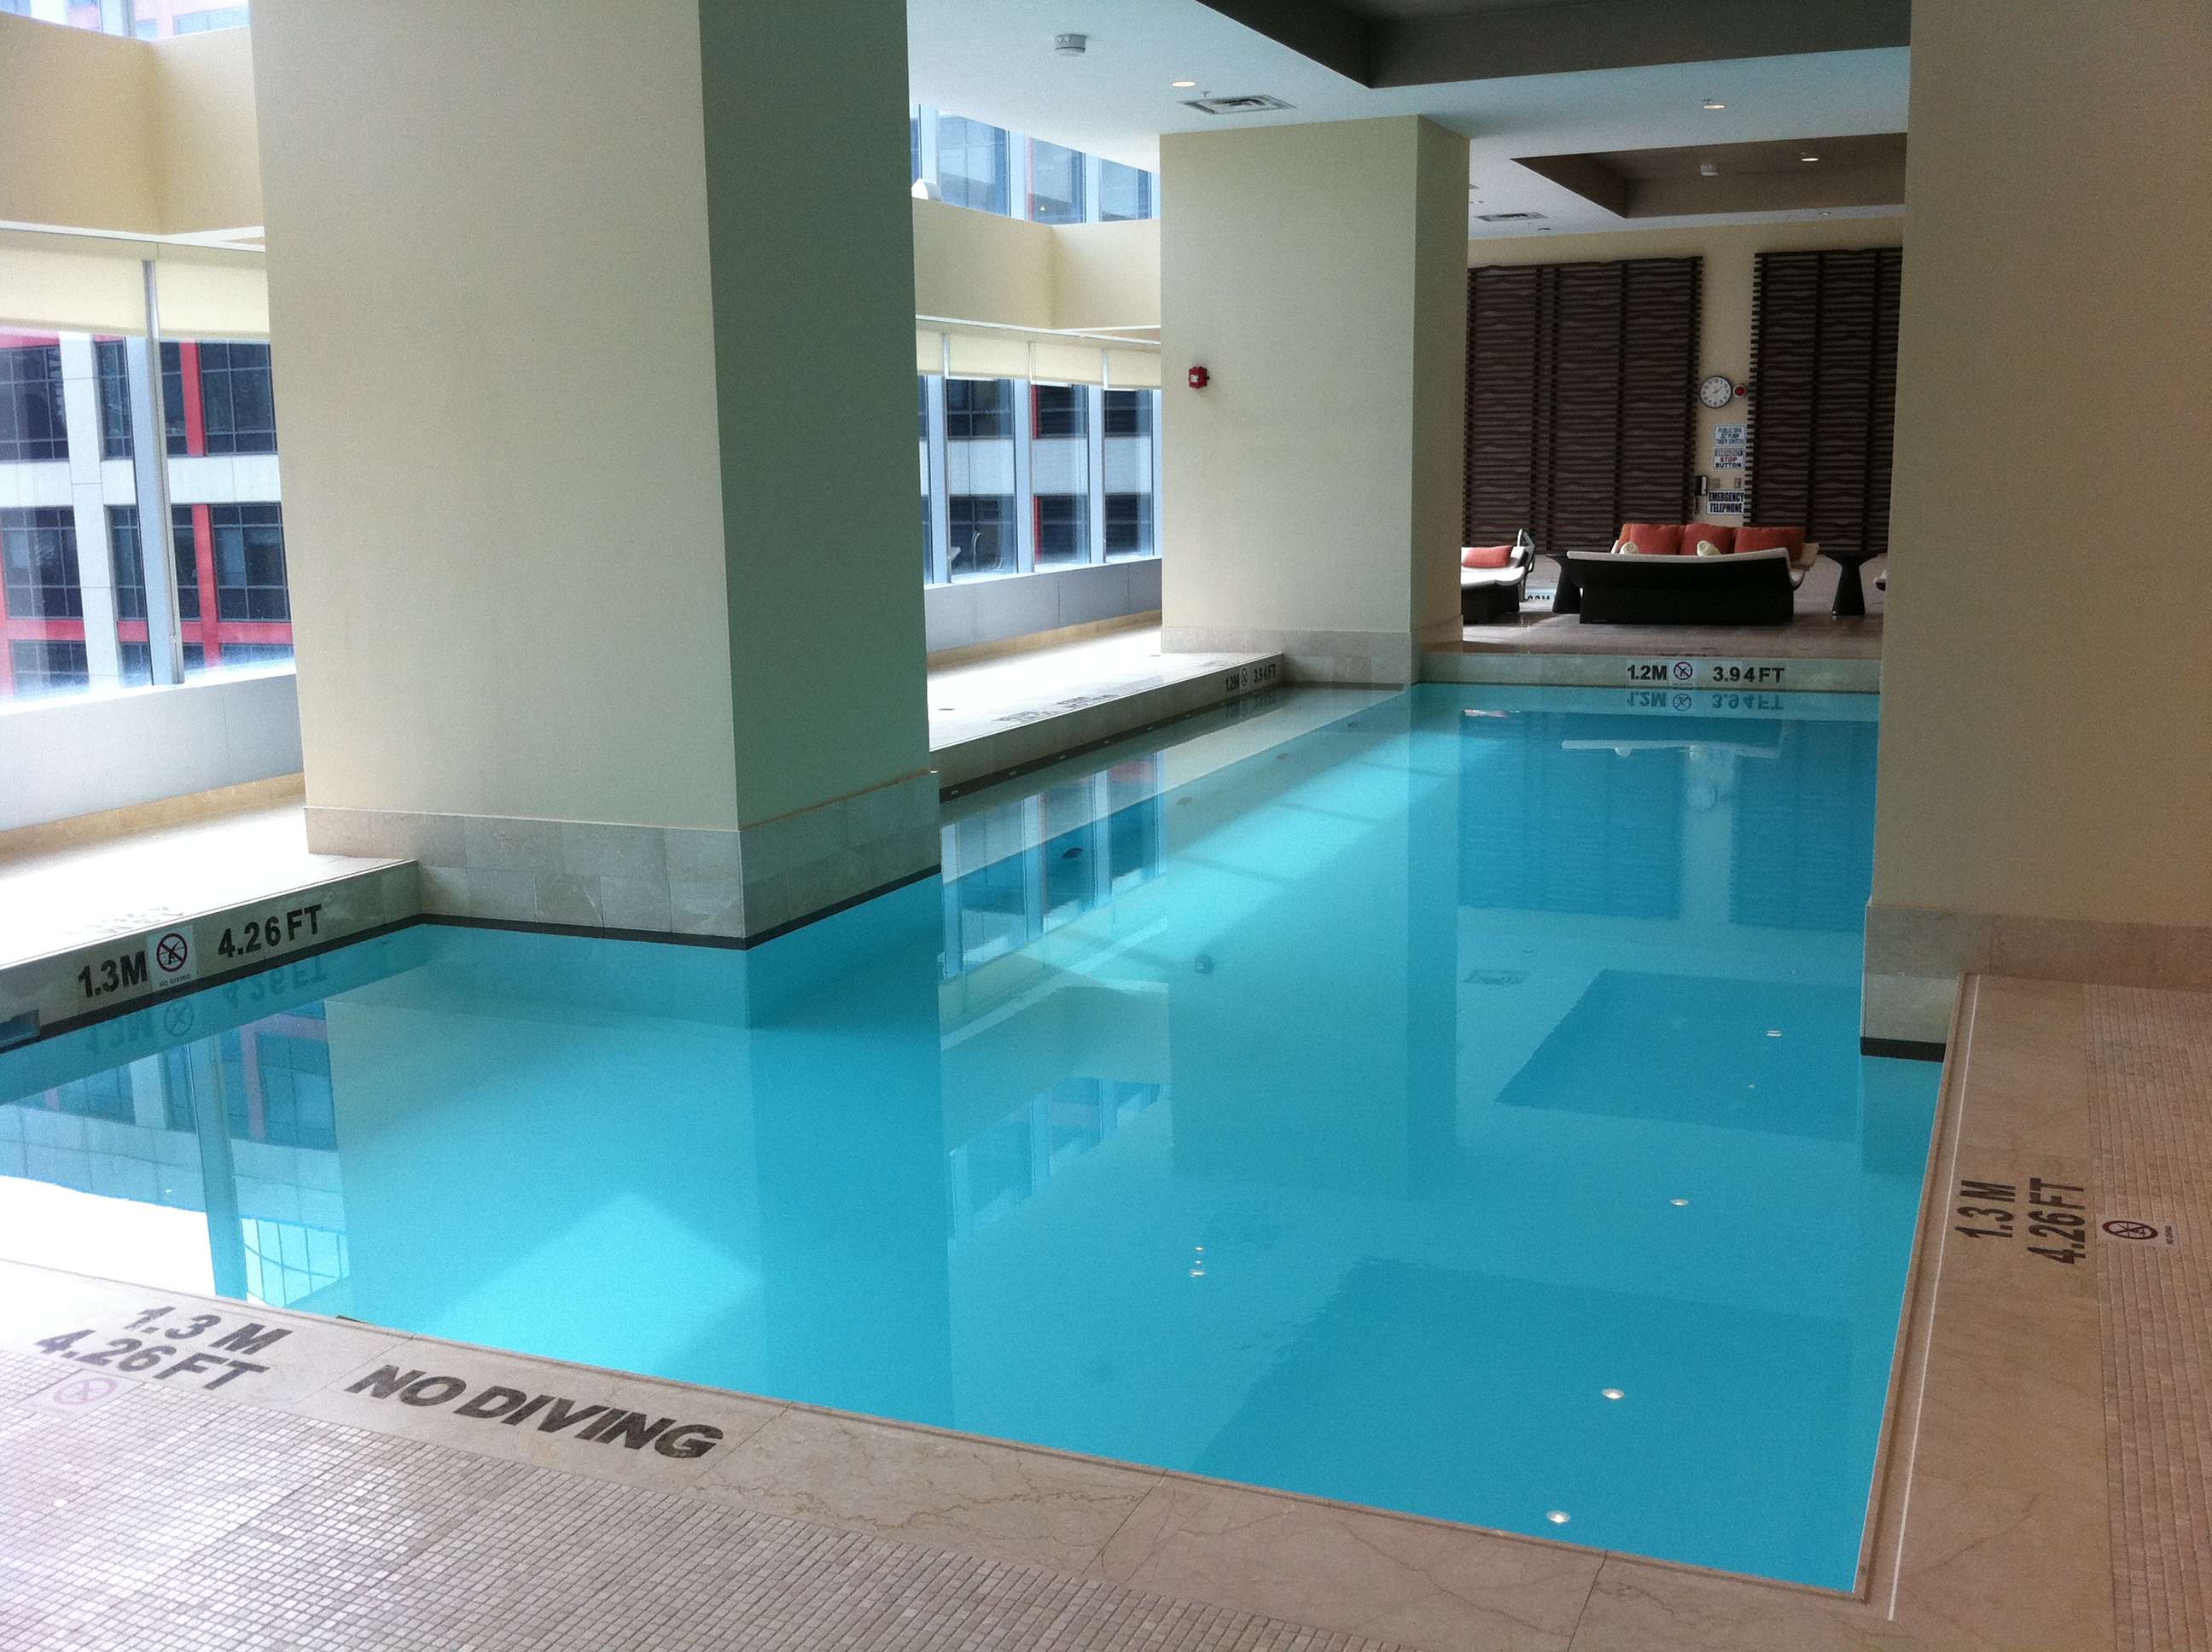 Ritz Carlton Pool 